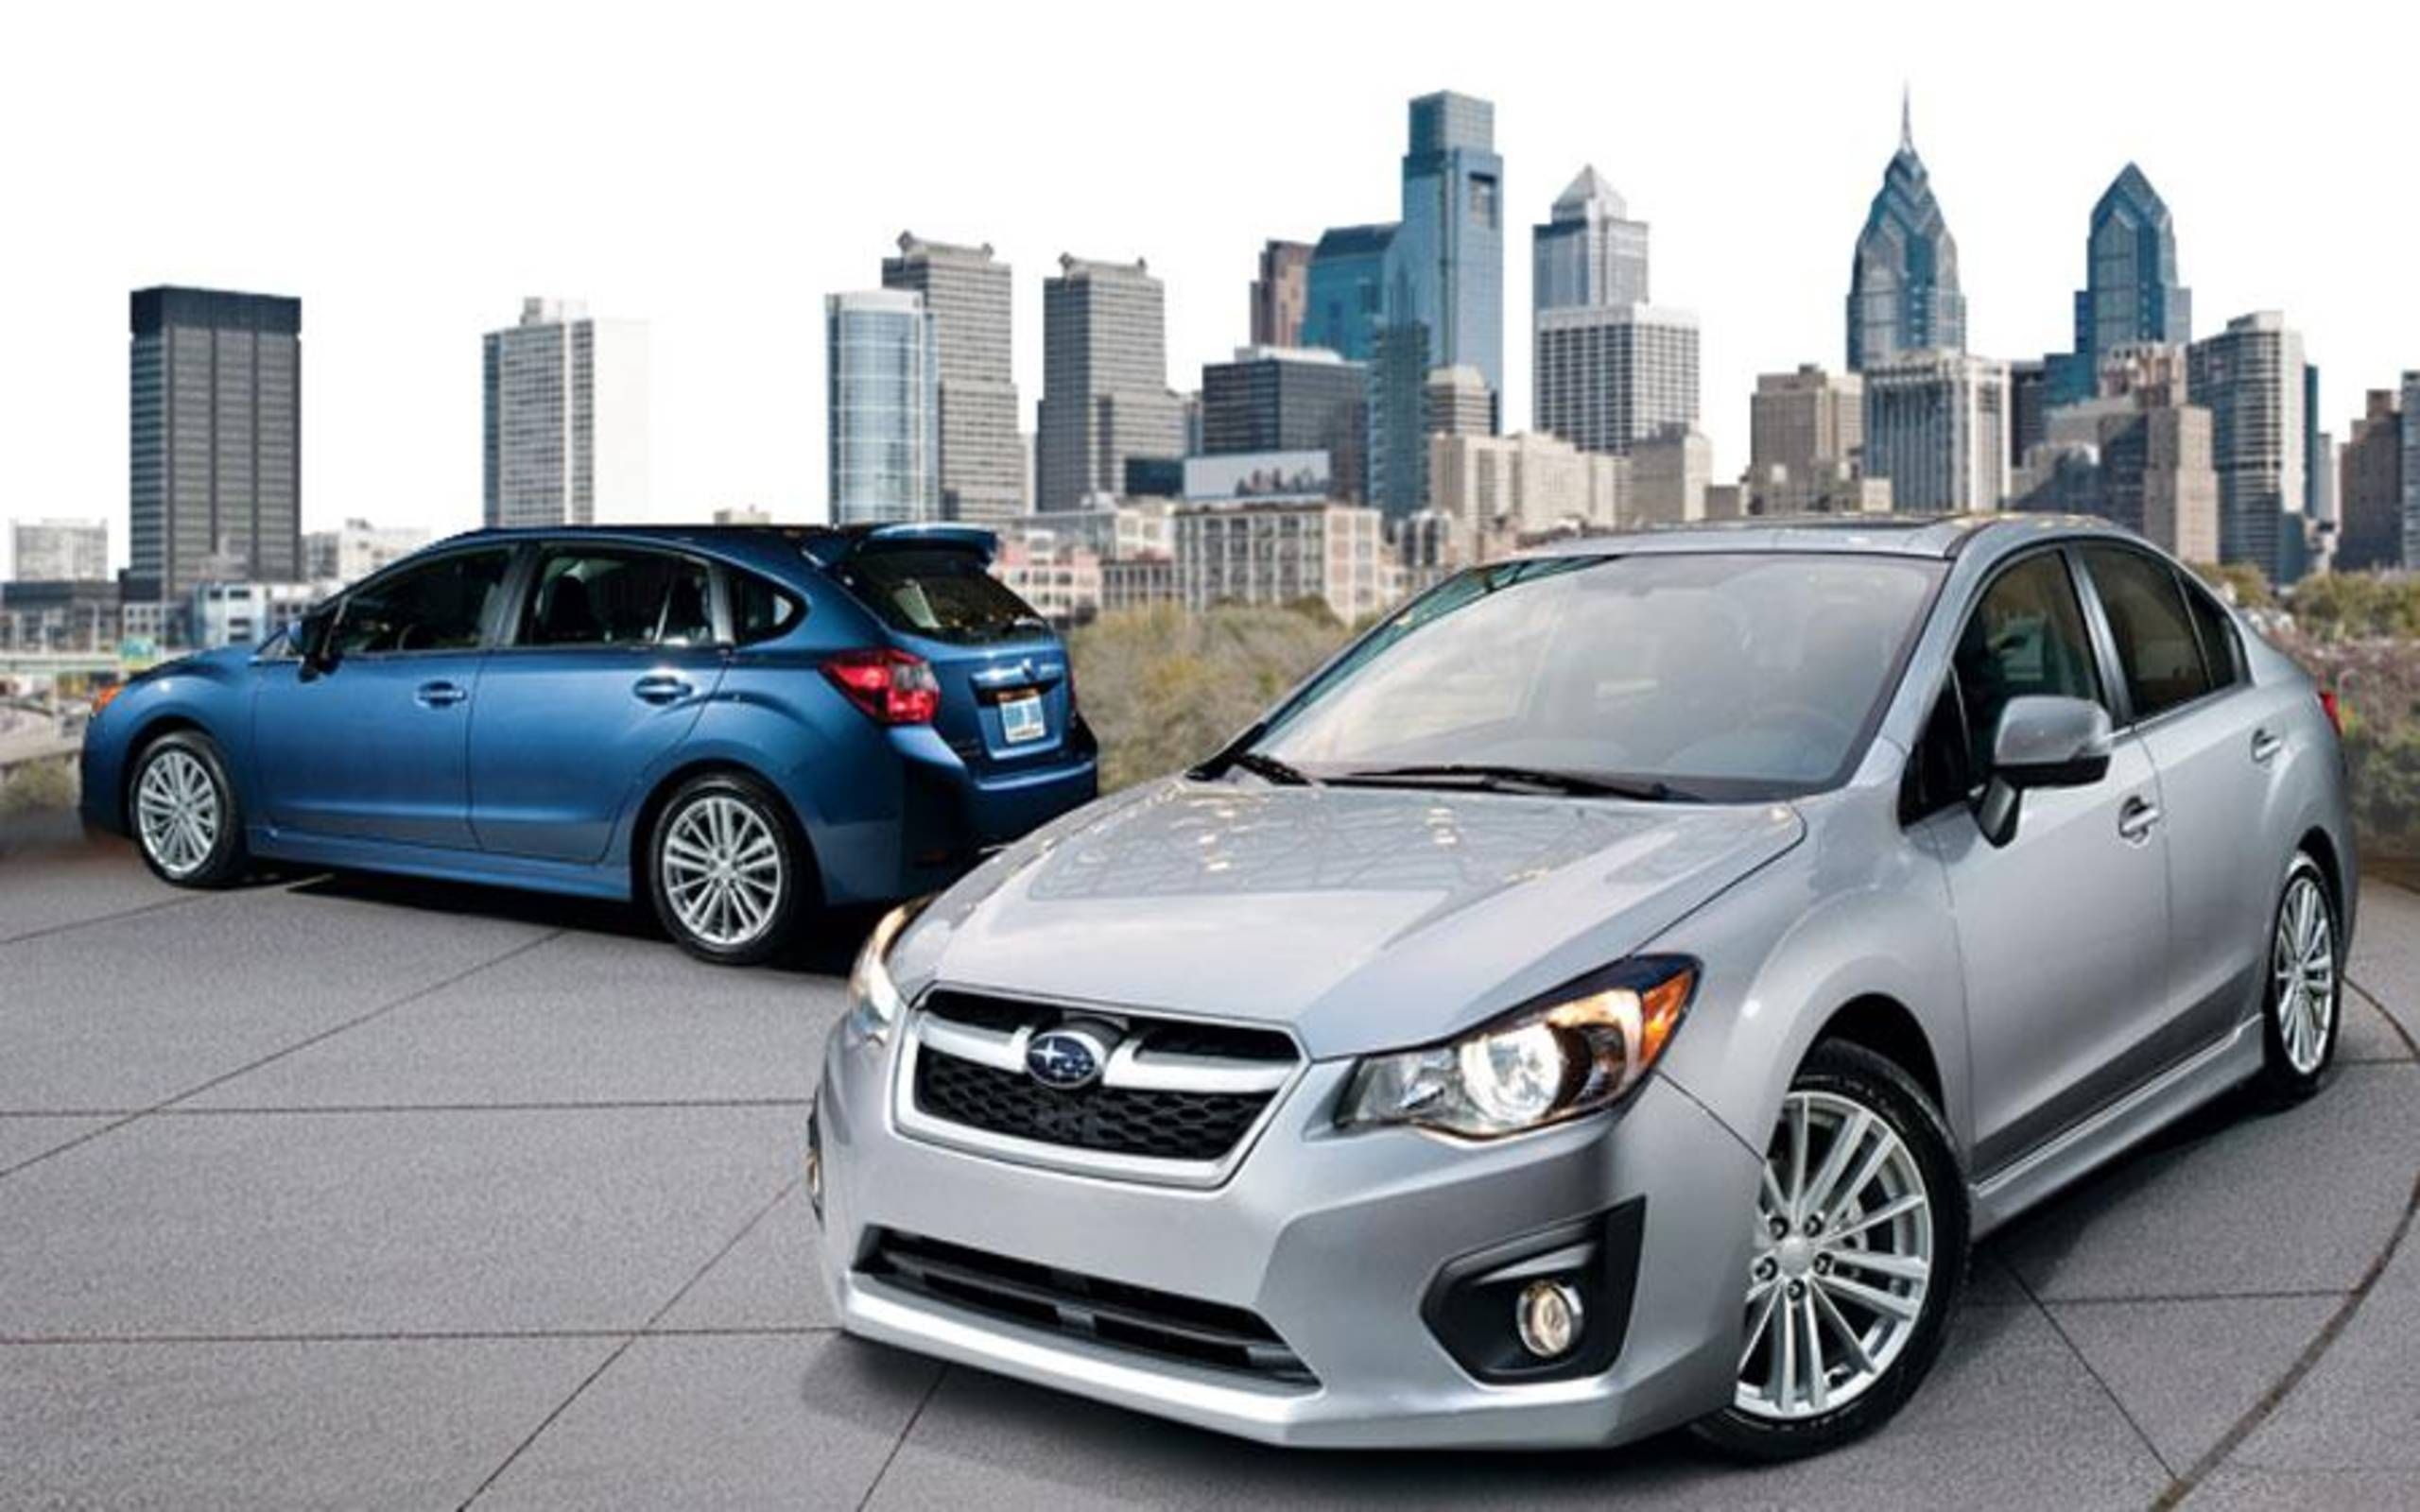 2013 Subaru Impreza 2.0i Premium 5-door review notes